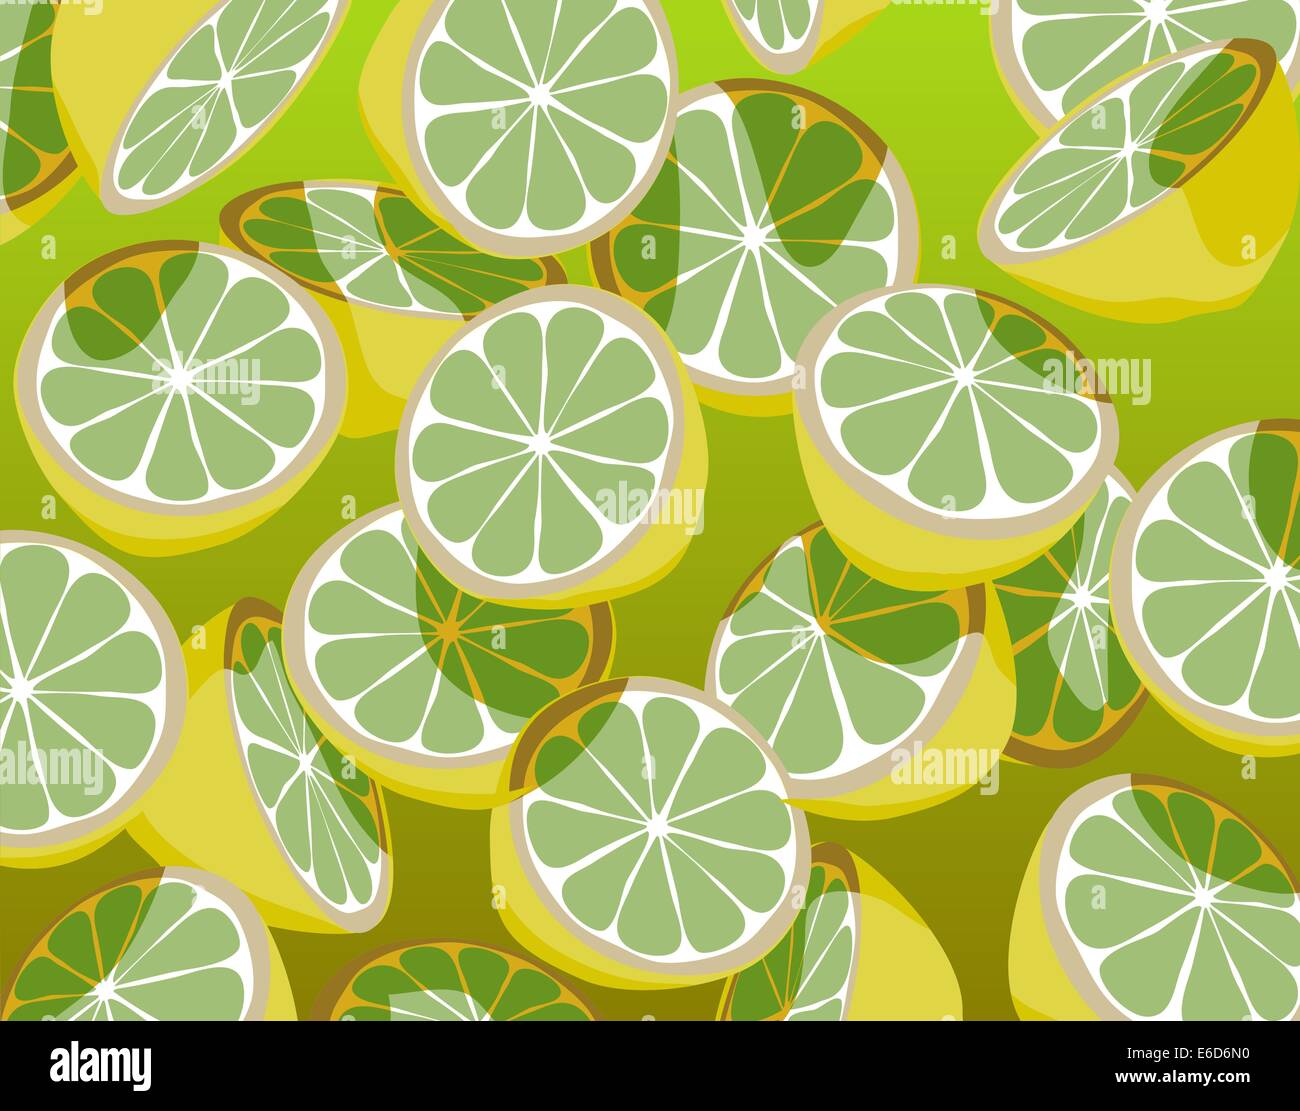 Bearbeitbares Vektor-Illustration des Fallens in Scheiben geschnittenen grünen Zitronen Stock Vektor